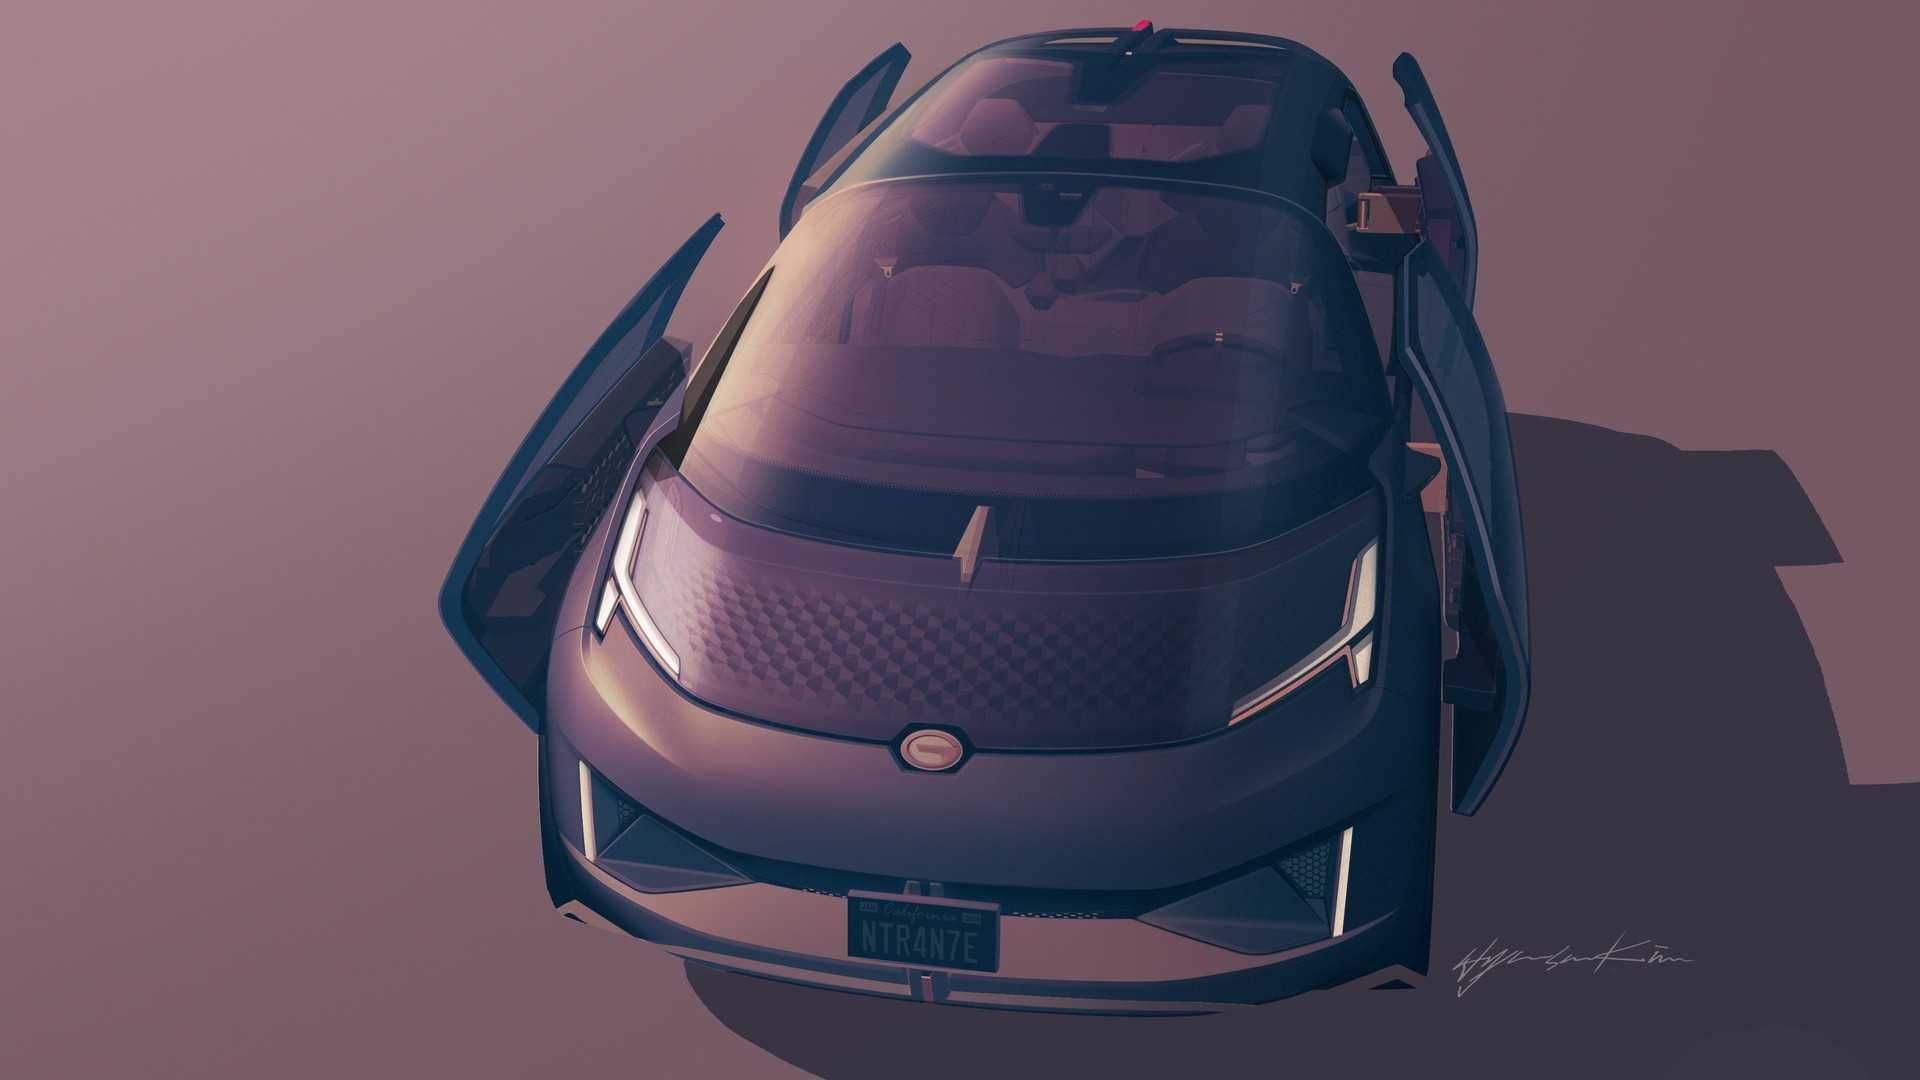 GAC Entranze Concept / خودروی مفهومی خودران